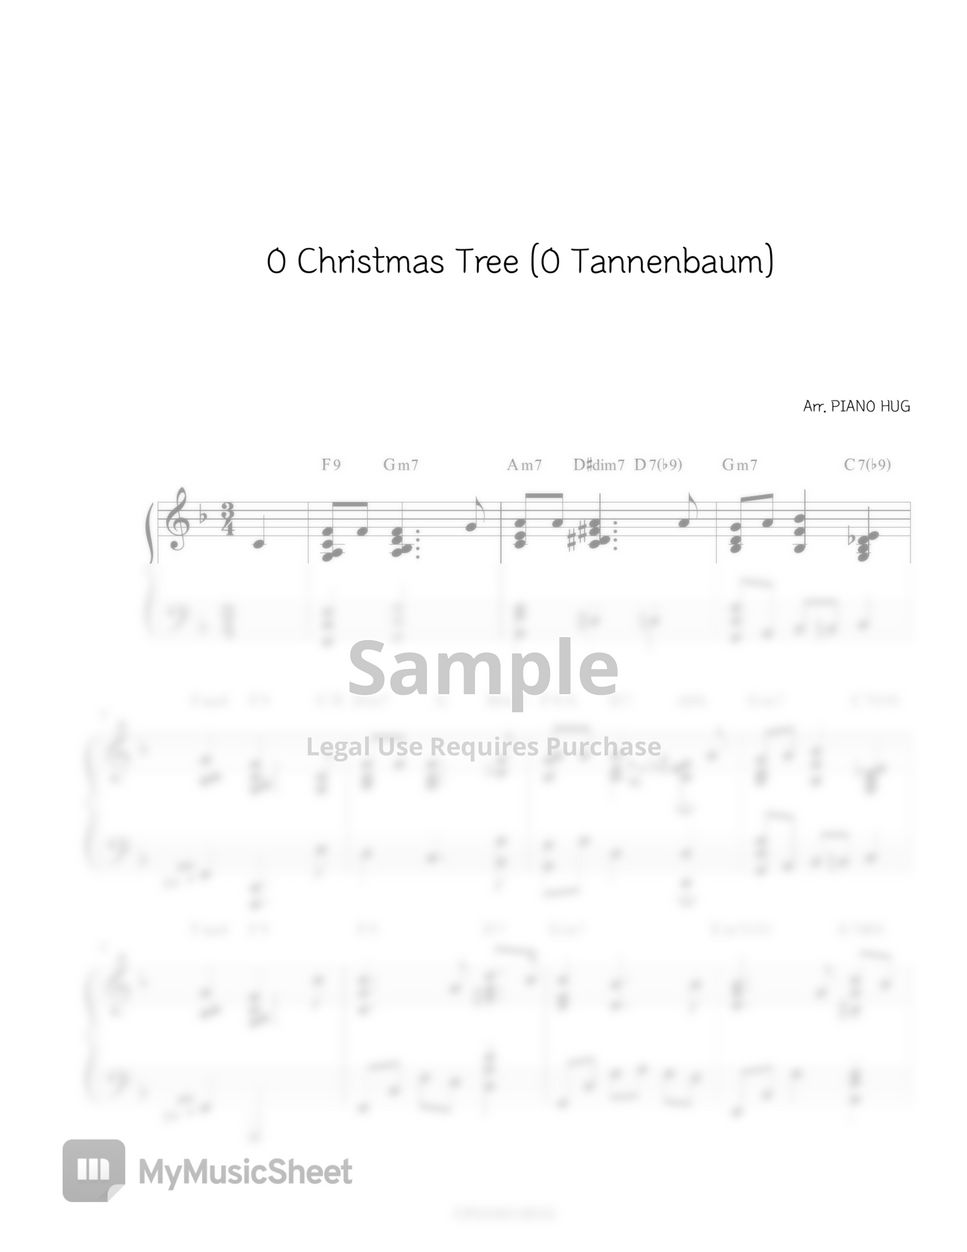 Christmas Carol - O Christmas Tree (O Tannenbaum) (Carol Jazz Piano) by Piano Hug